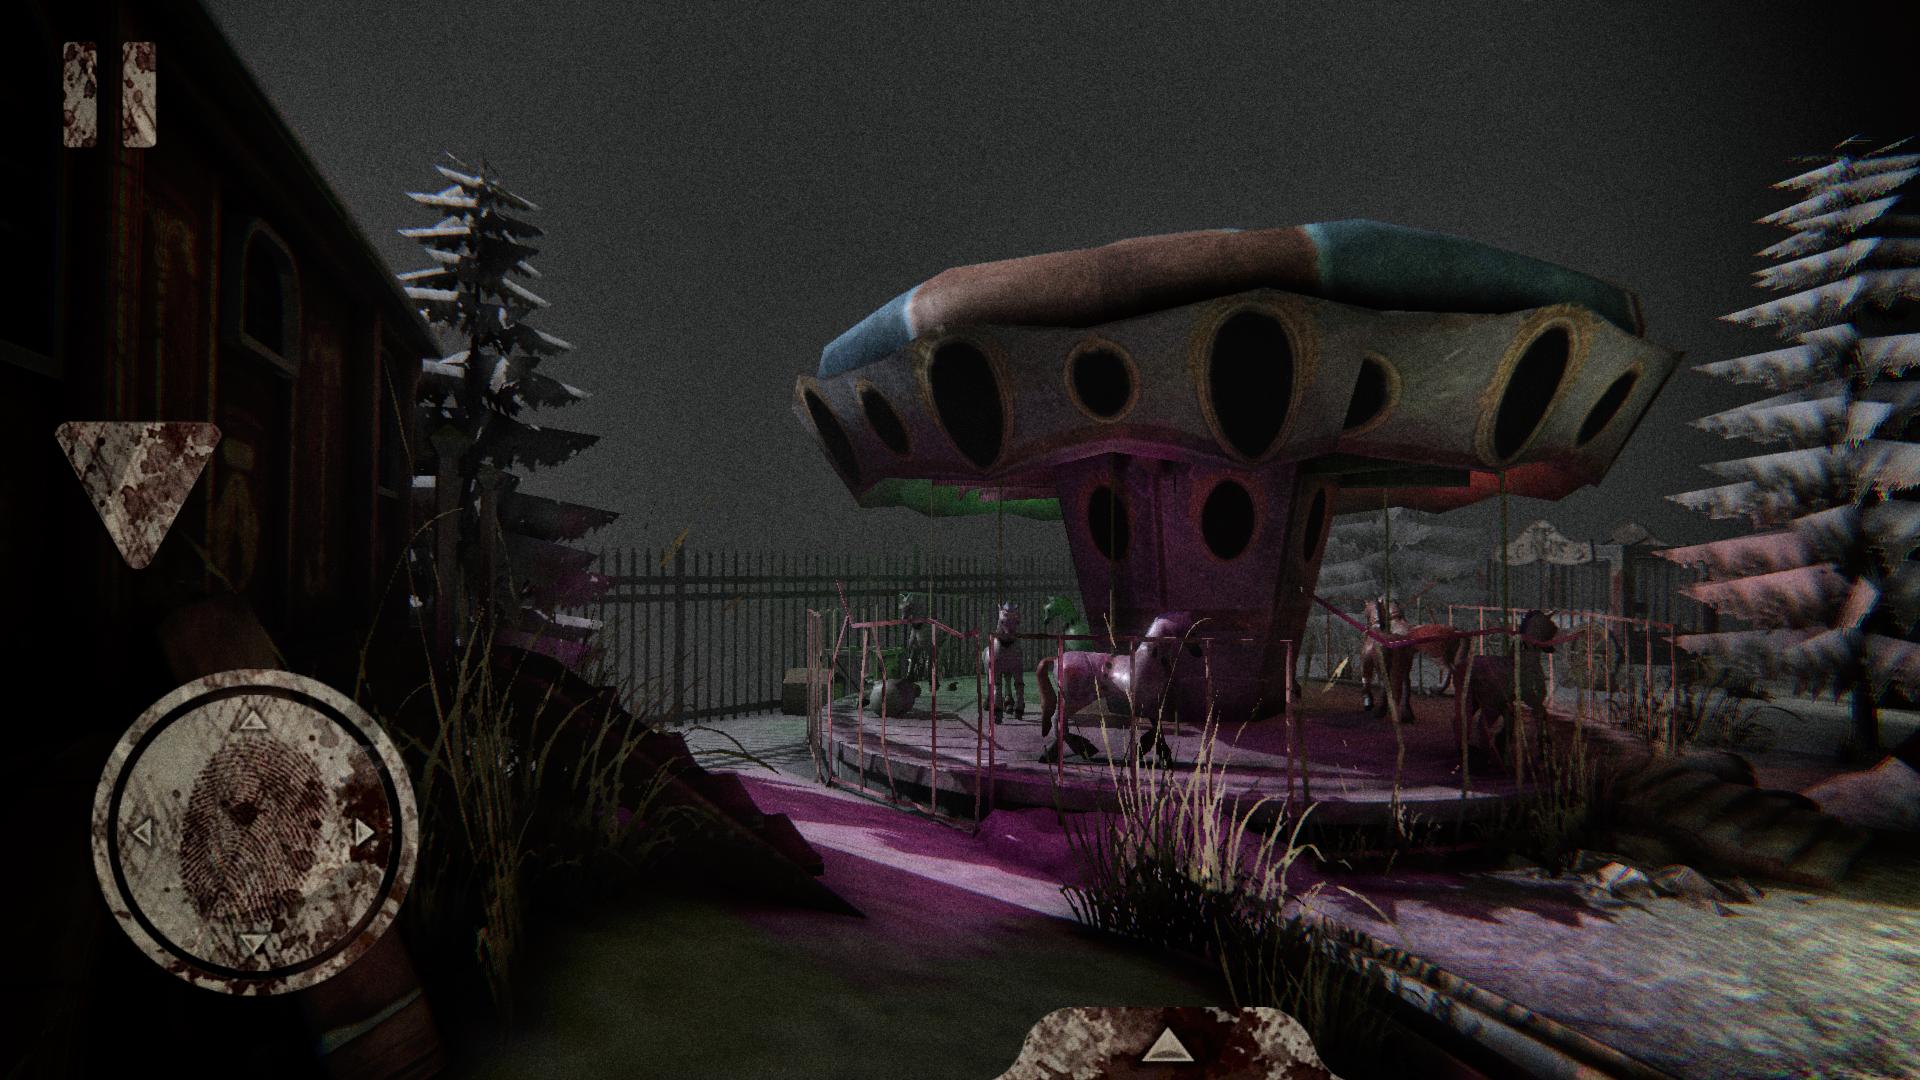 Death Park Scary Clown Survival Horror Game 1.6.0 Screenshot 6